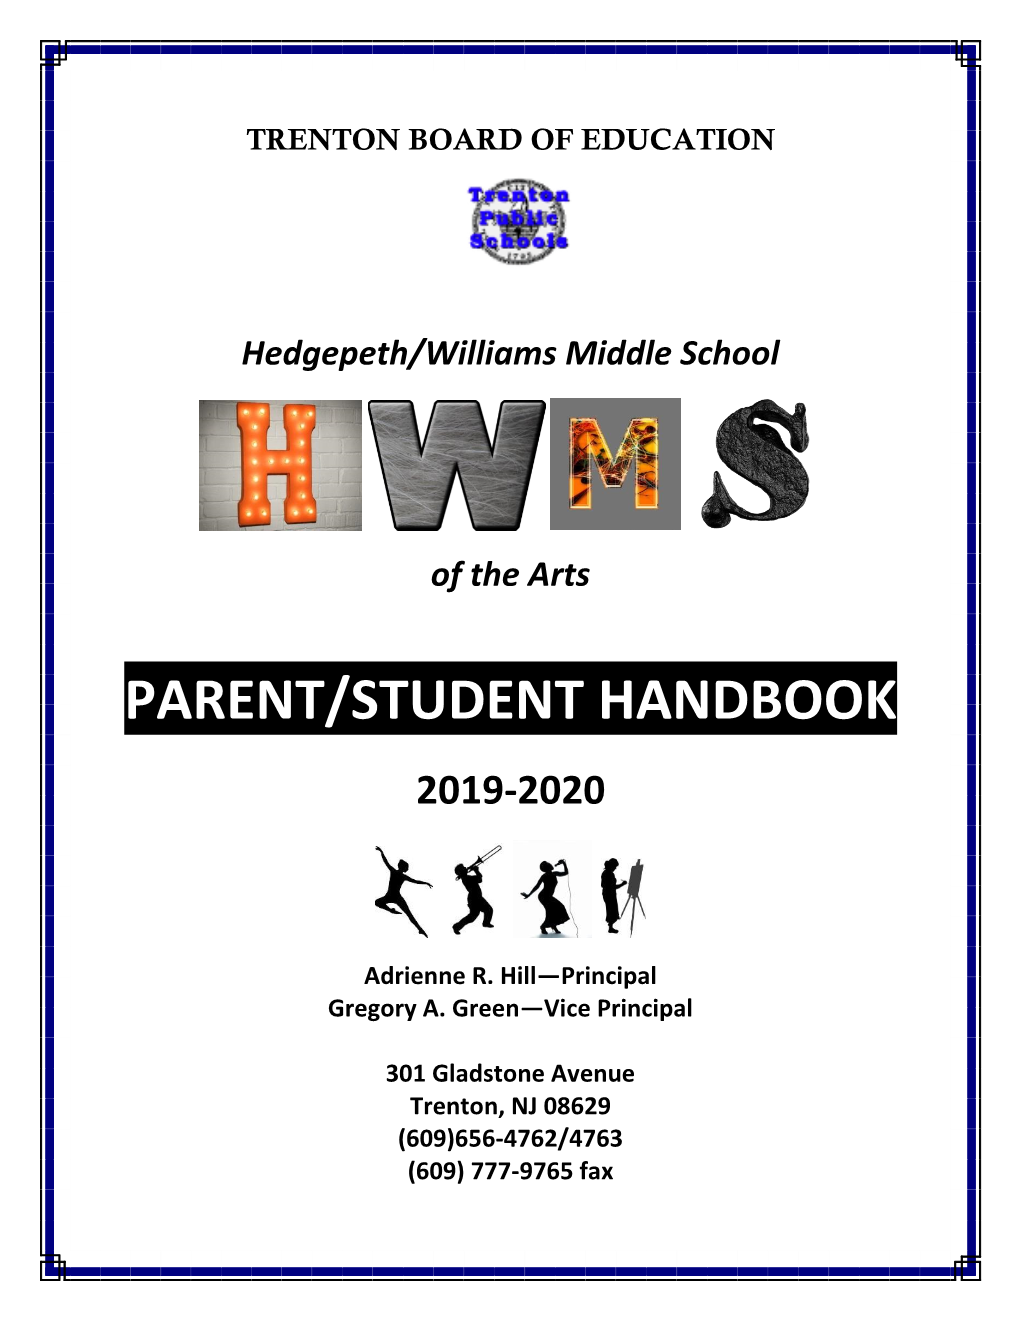 Parent/Student Handbook 2019-2020